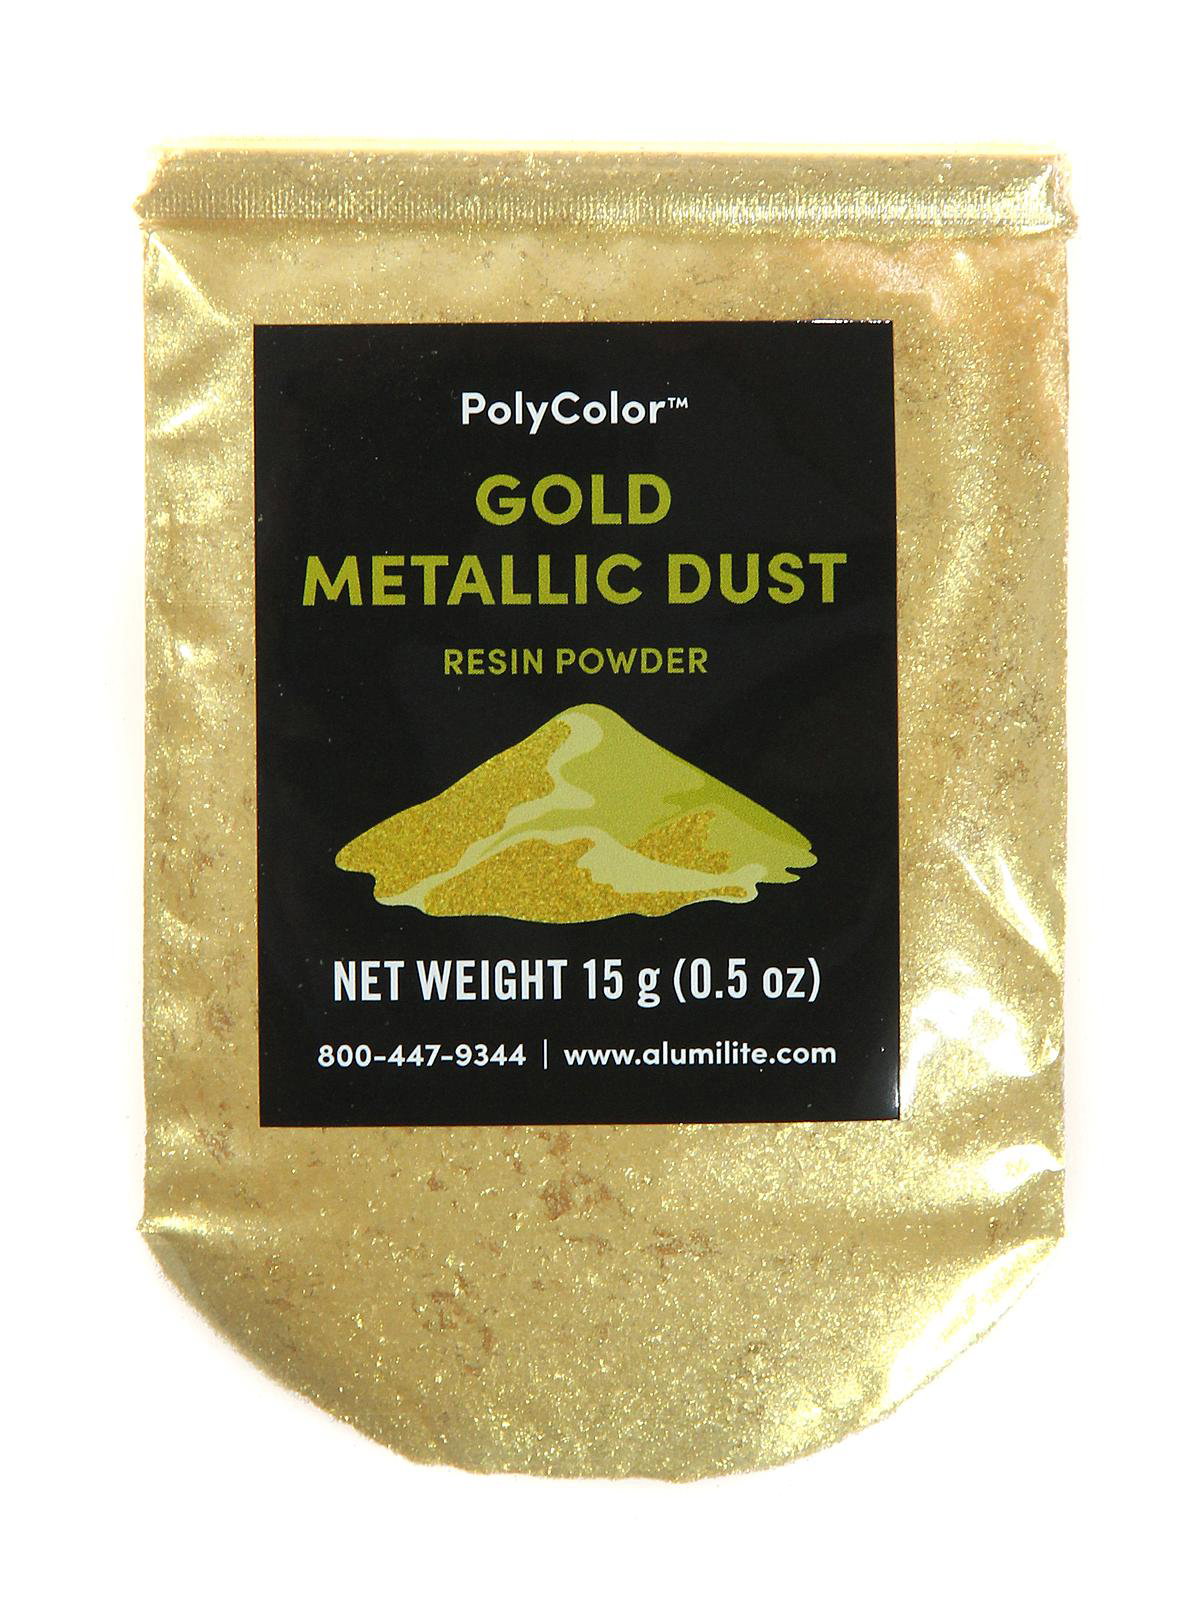 Top 10 Best Edible Gold Dust - FDA Compliant Luster Dust - Bakell